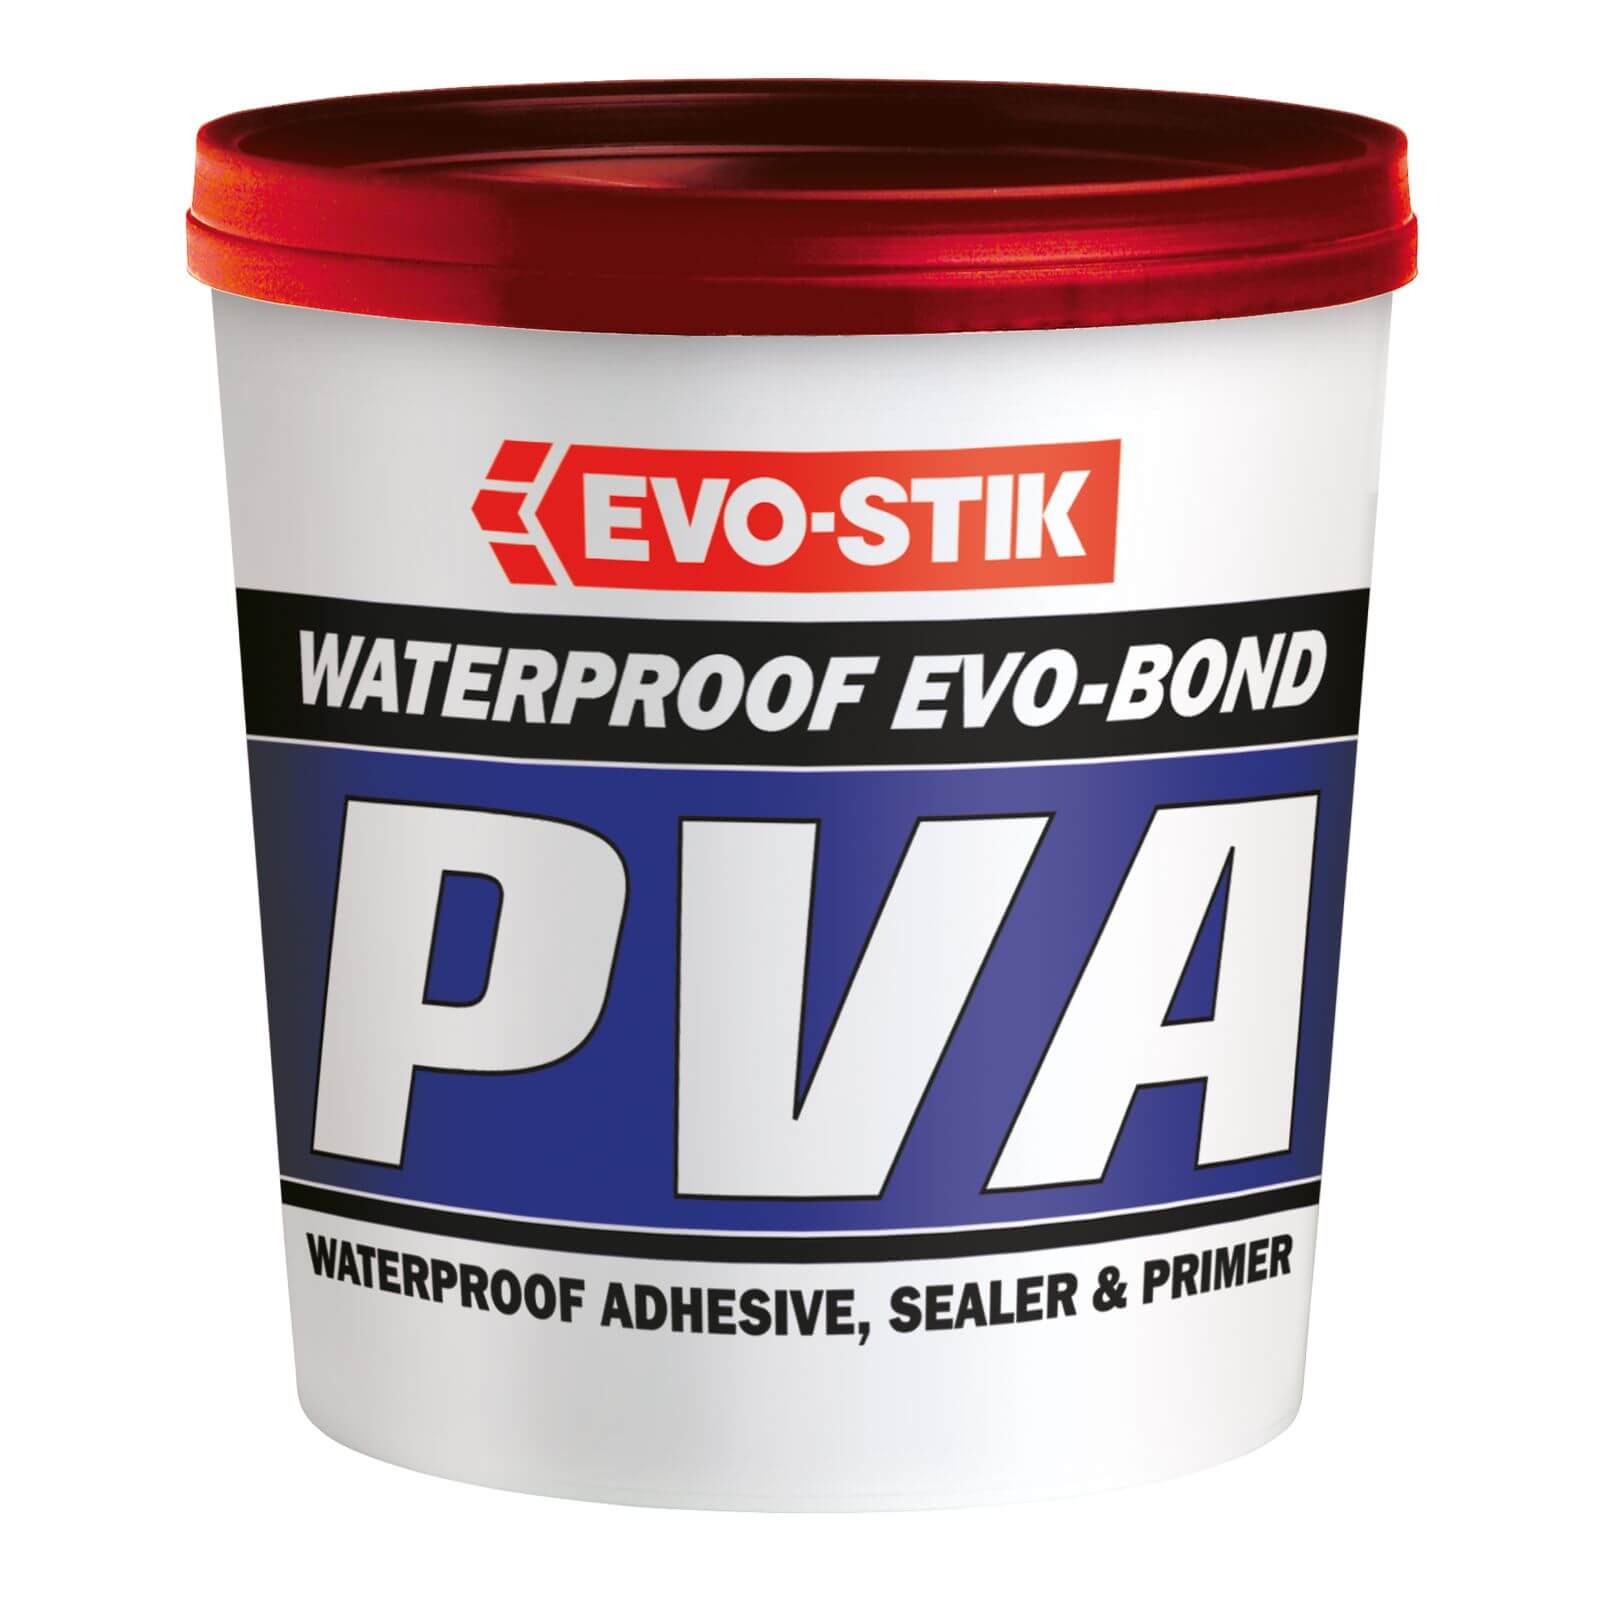 Photo of Evo-bond Pva Waterproof - 1l